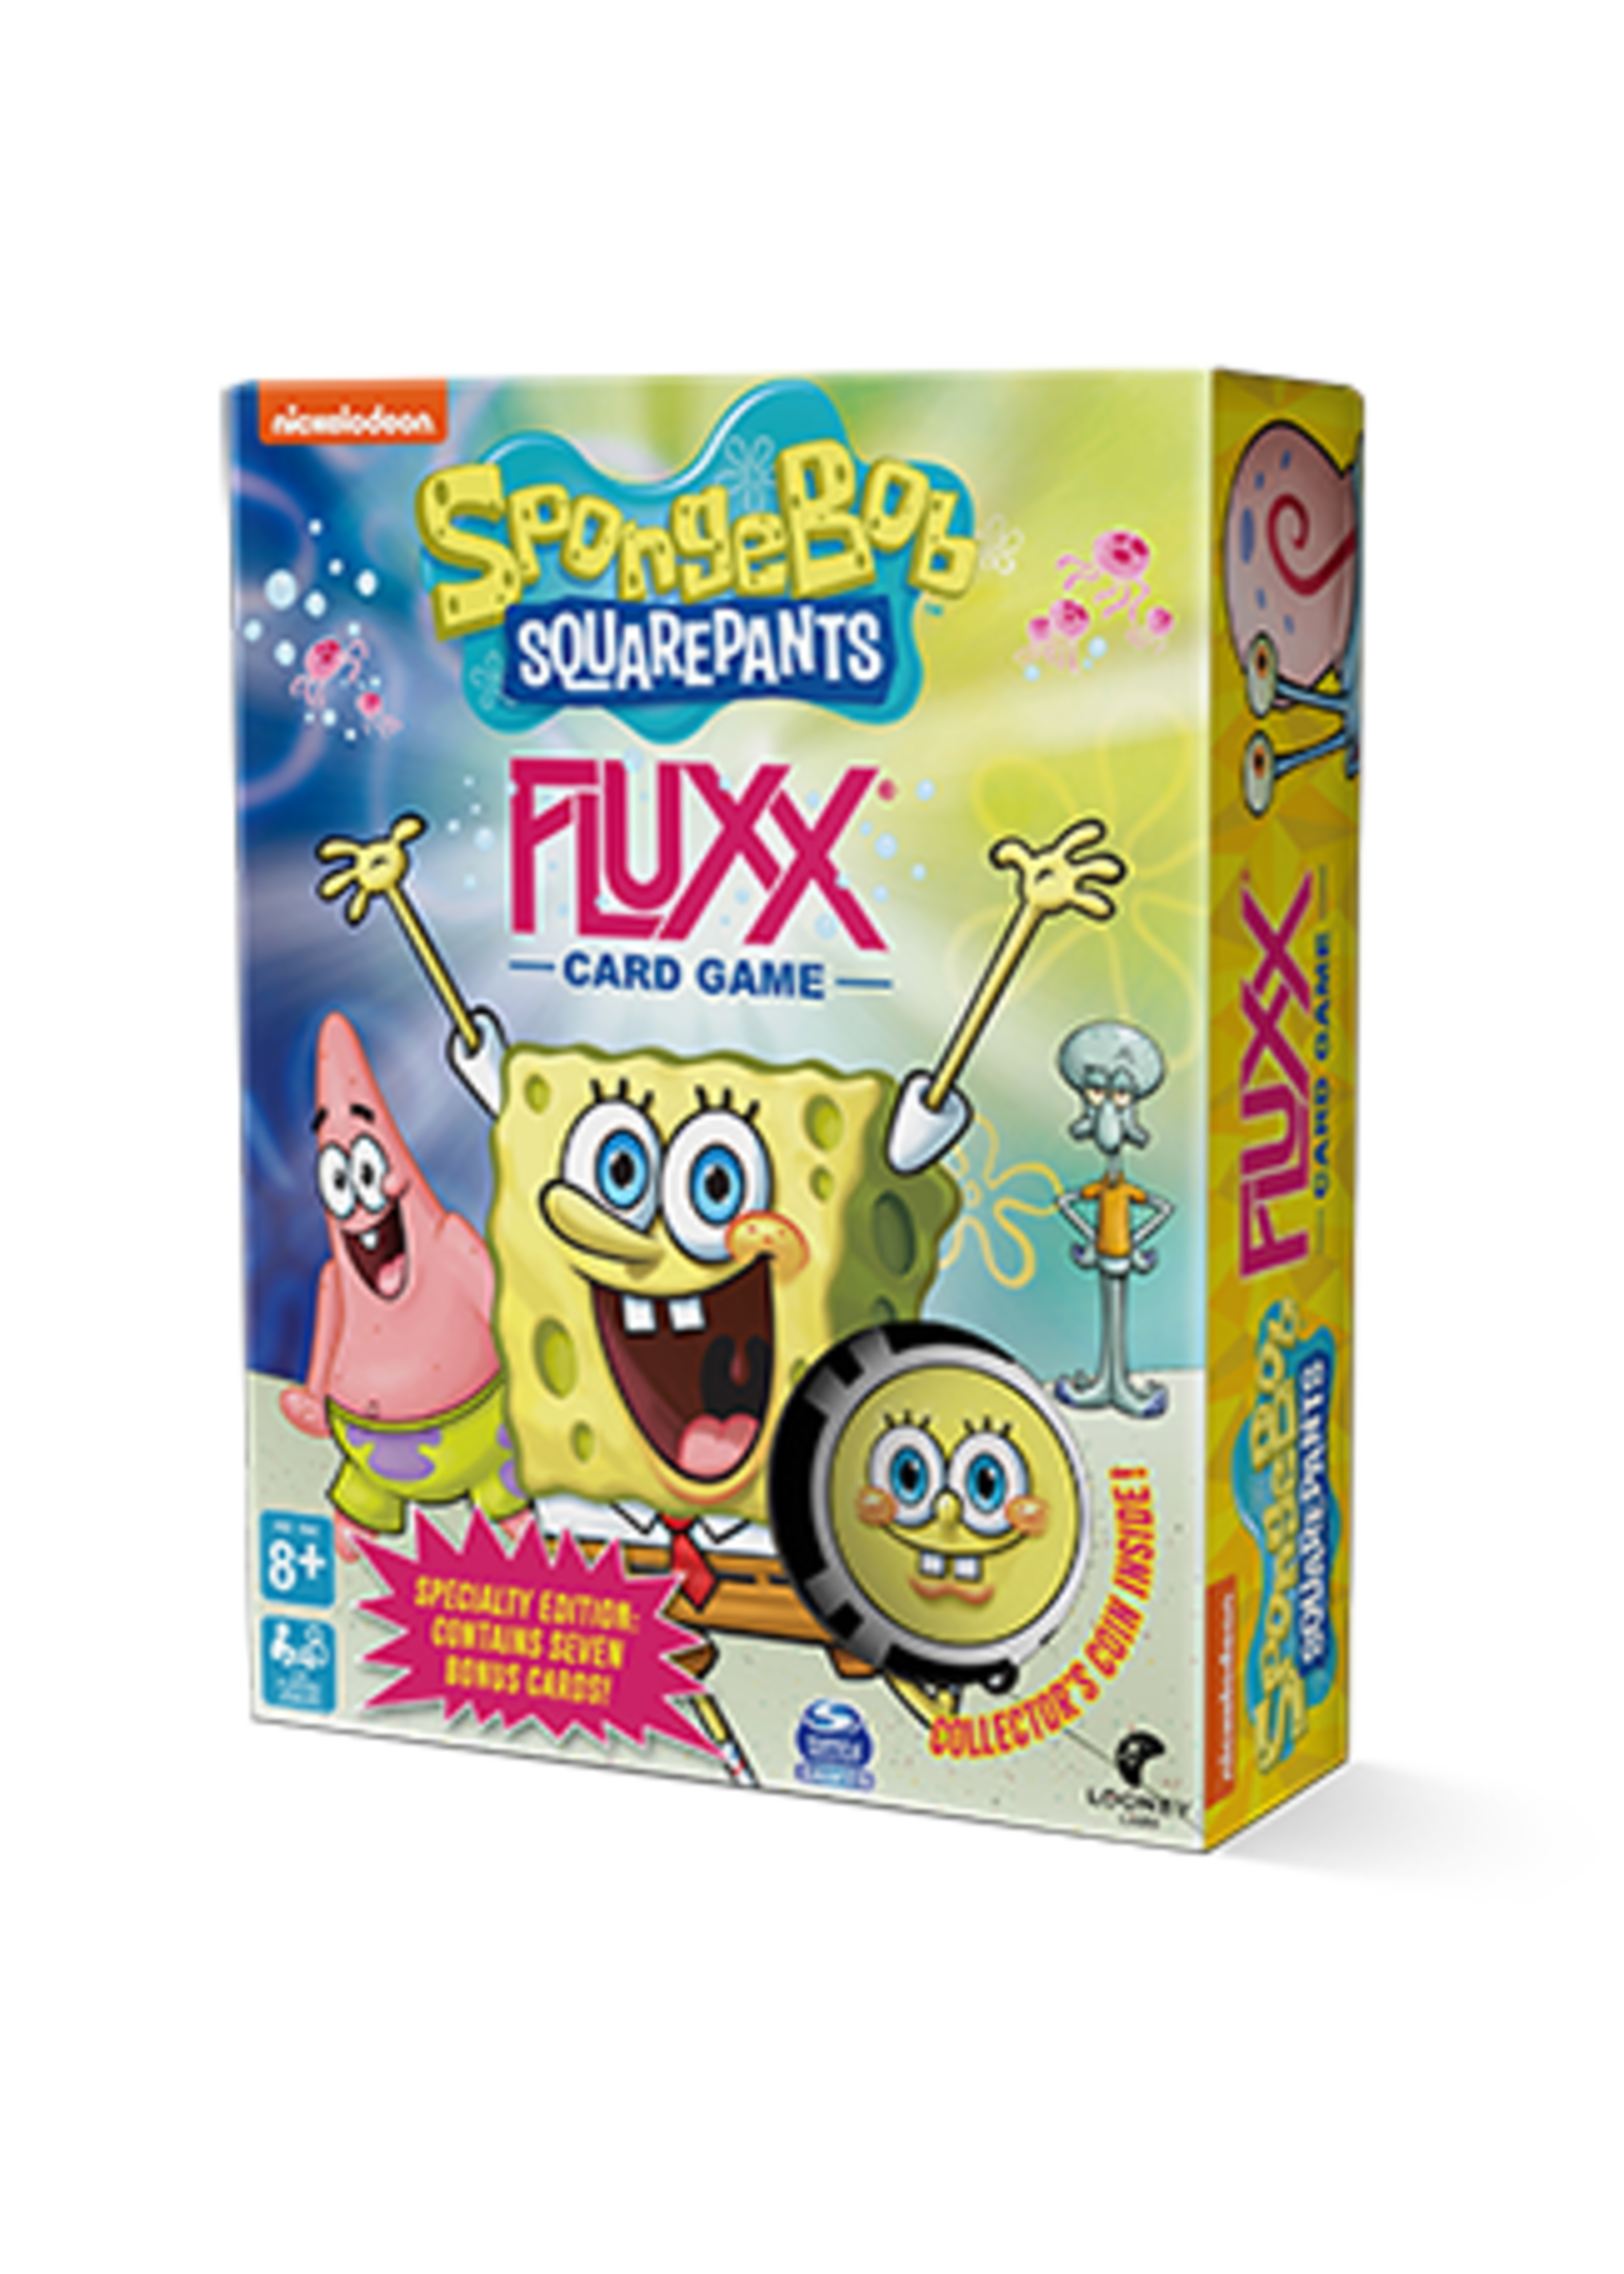 SpongeBob Fluxx - Specialty Edition